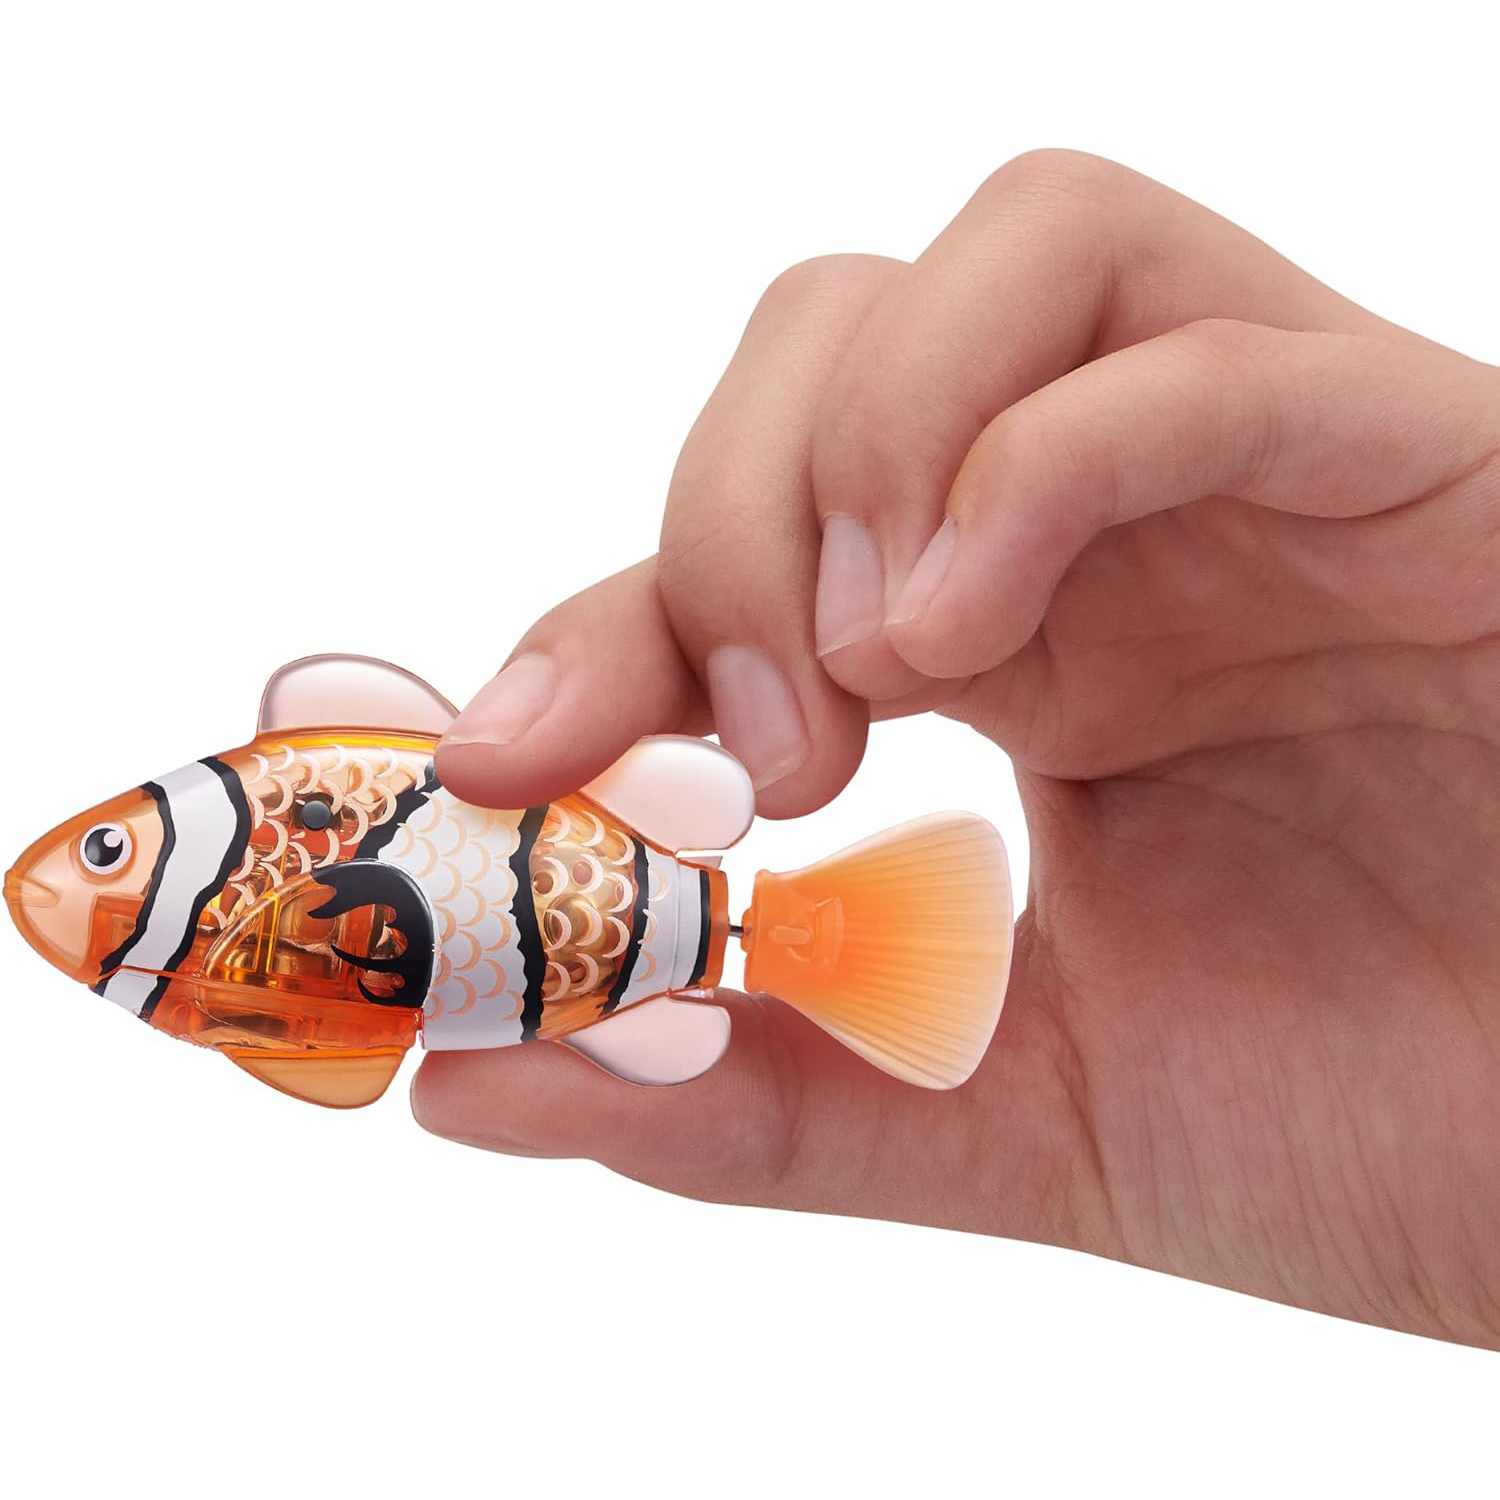 bath toy fish robots